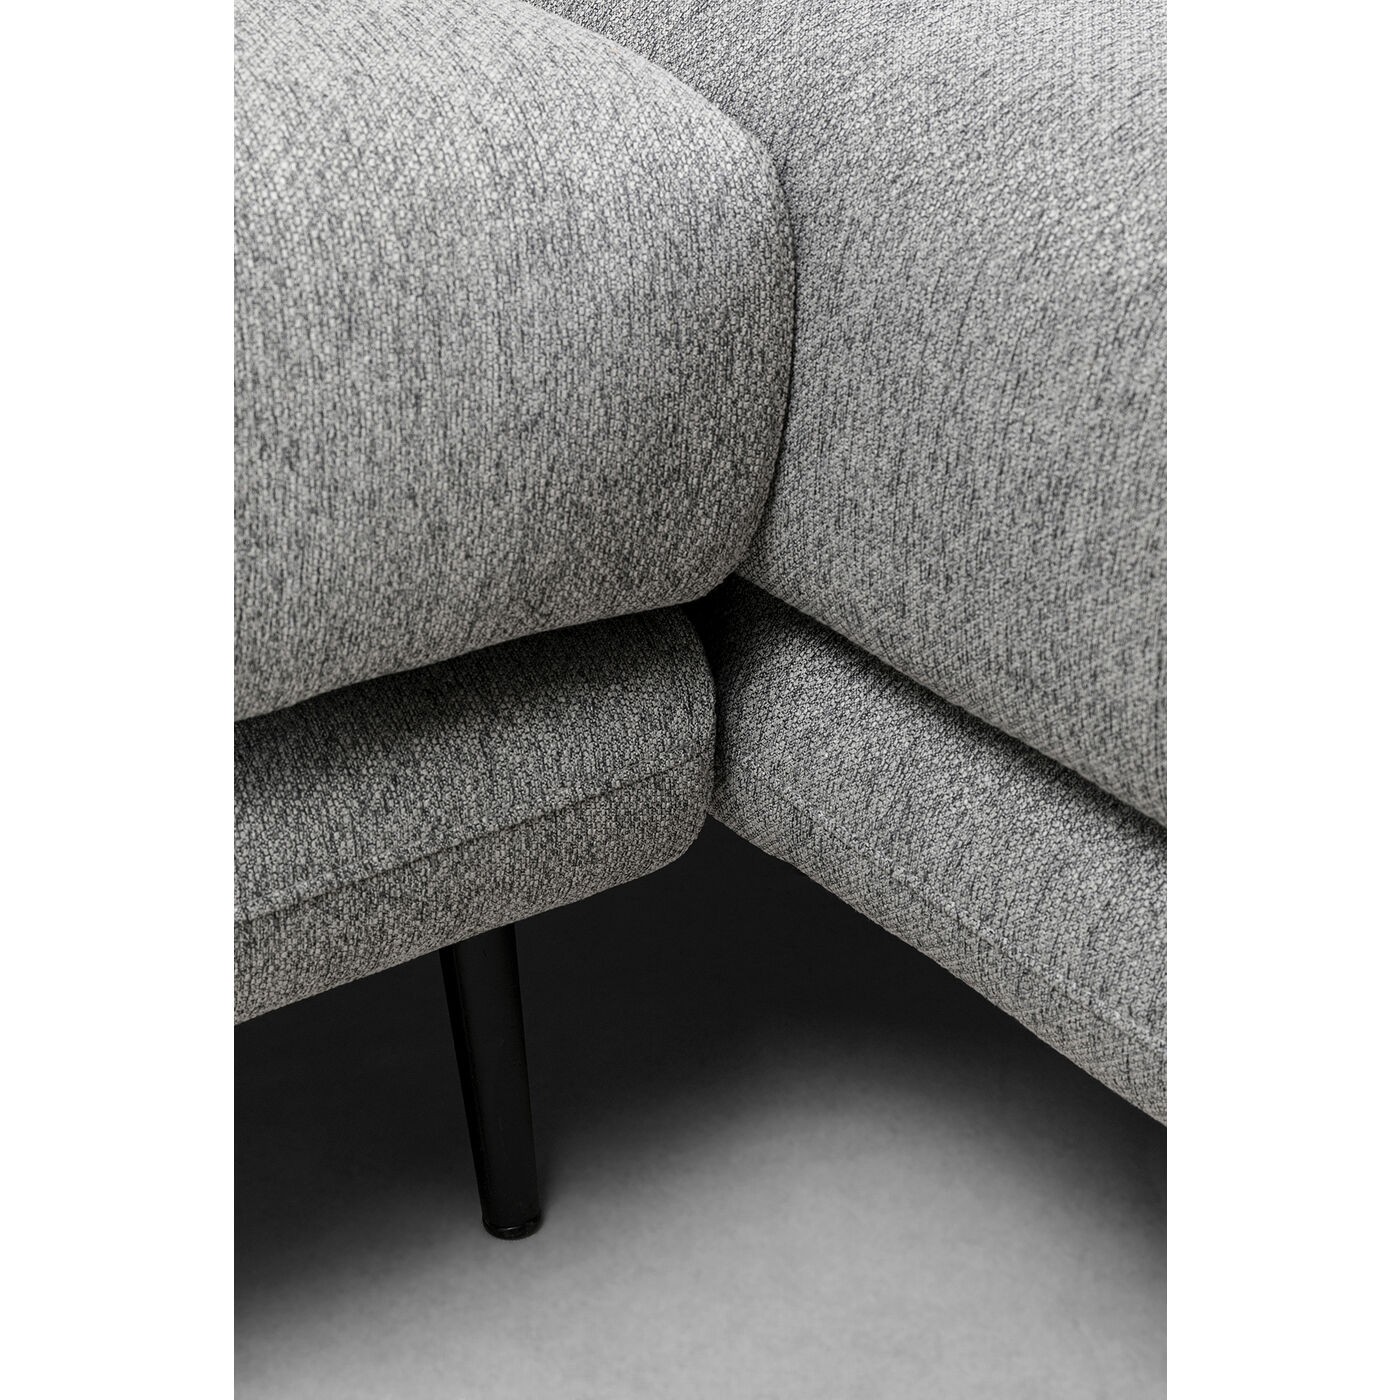 Canapé d'angle Amalfi droite gris Kare Design